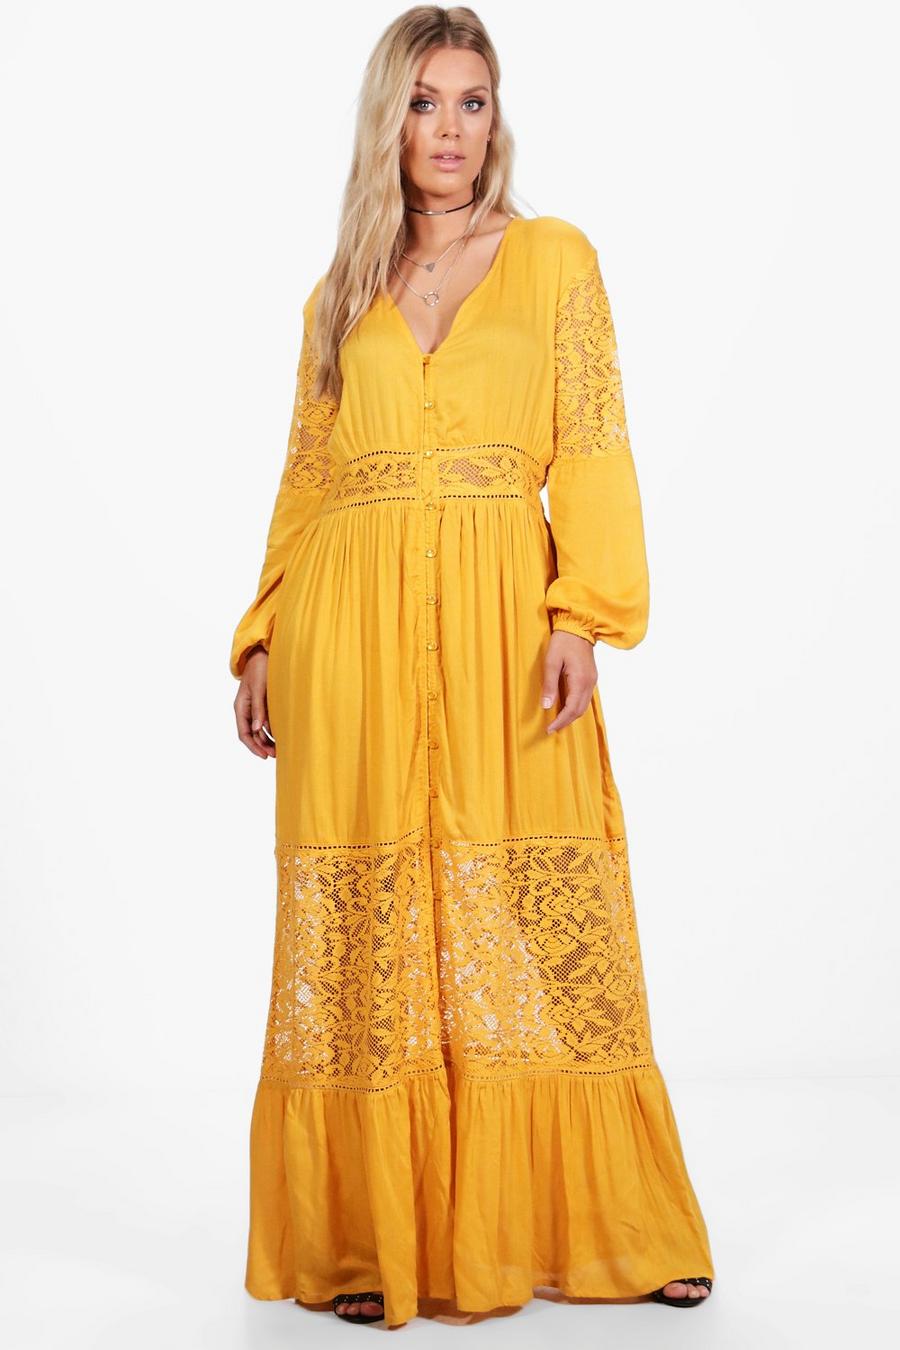 Ochre yellow Plus Boho Lace Insert Maxi Dress image number 1